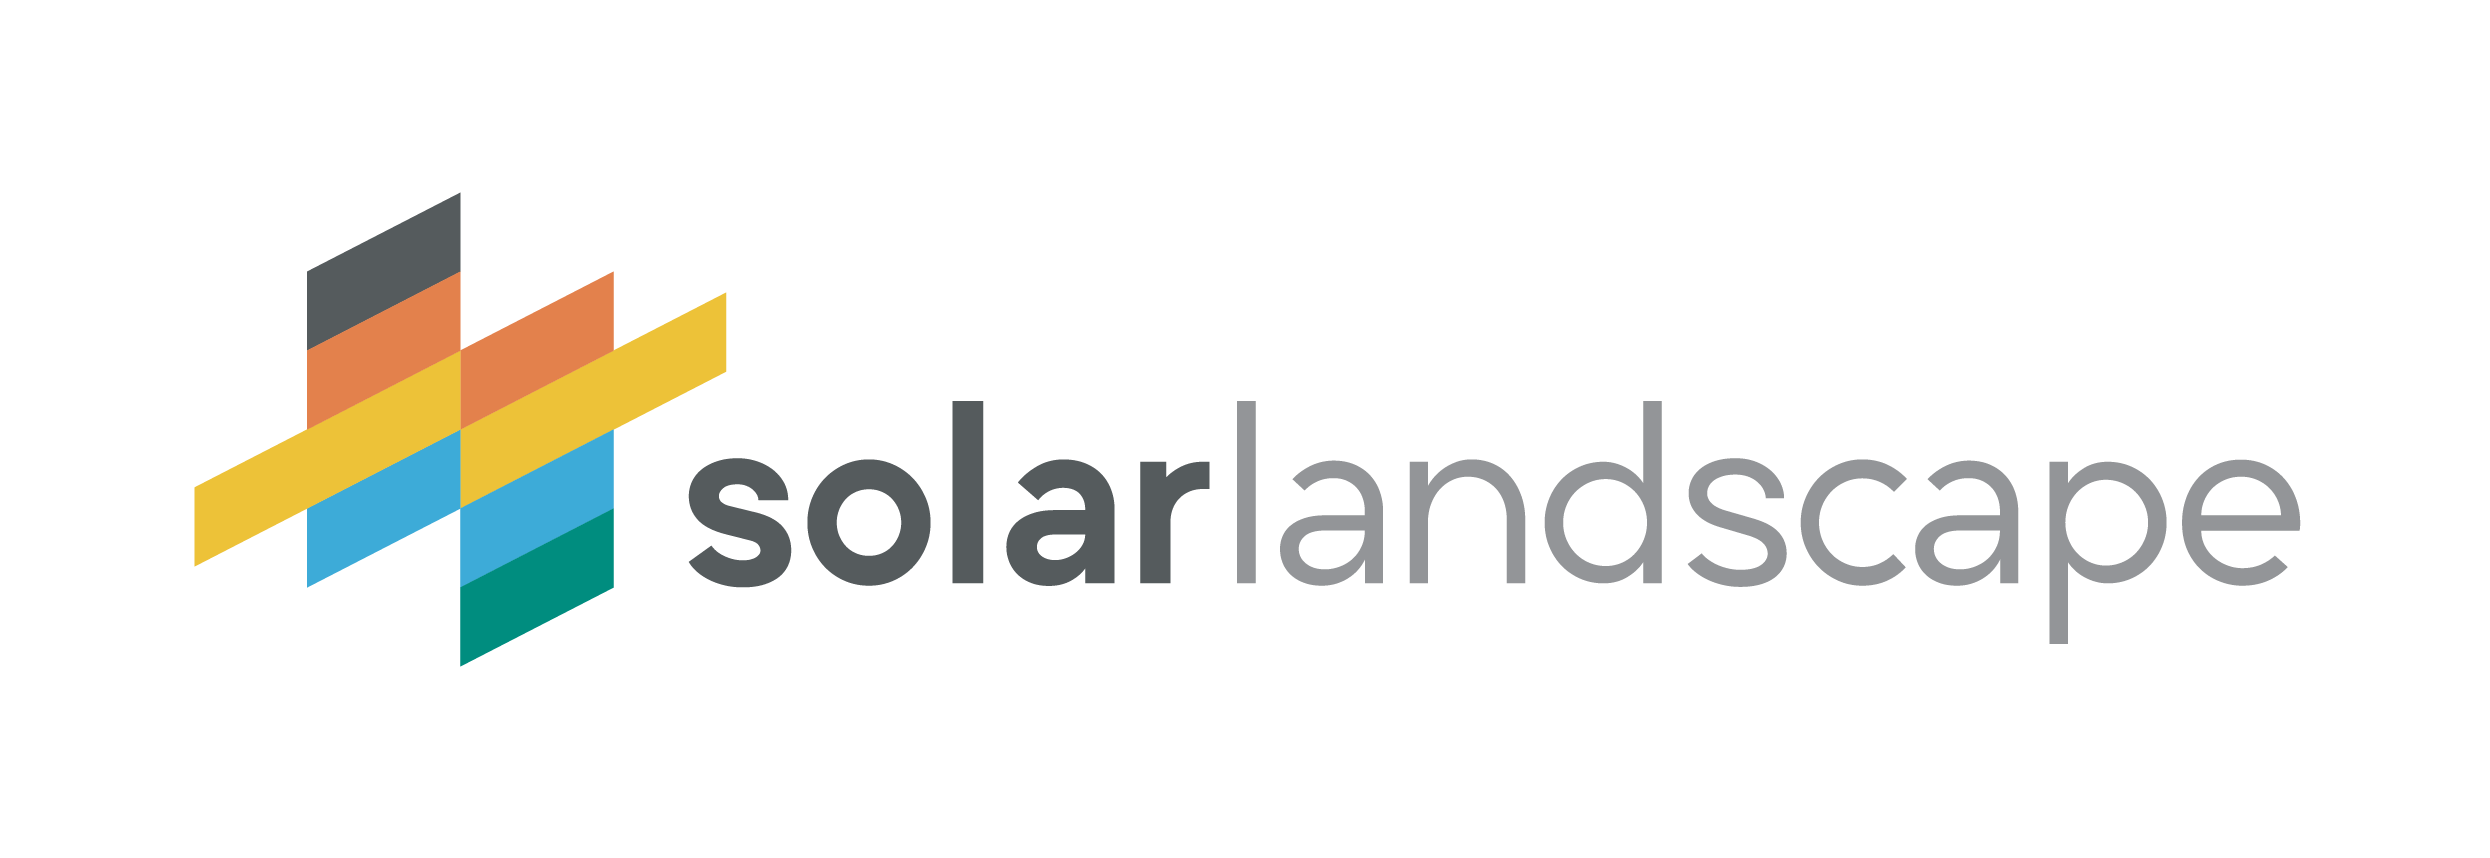 Solar Landscape logo